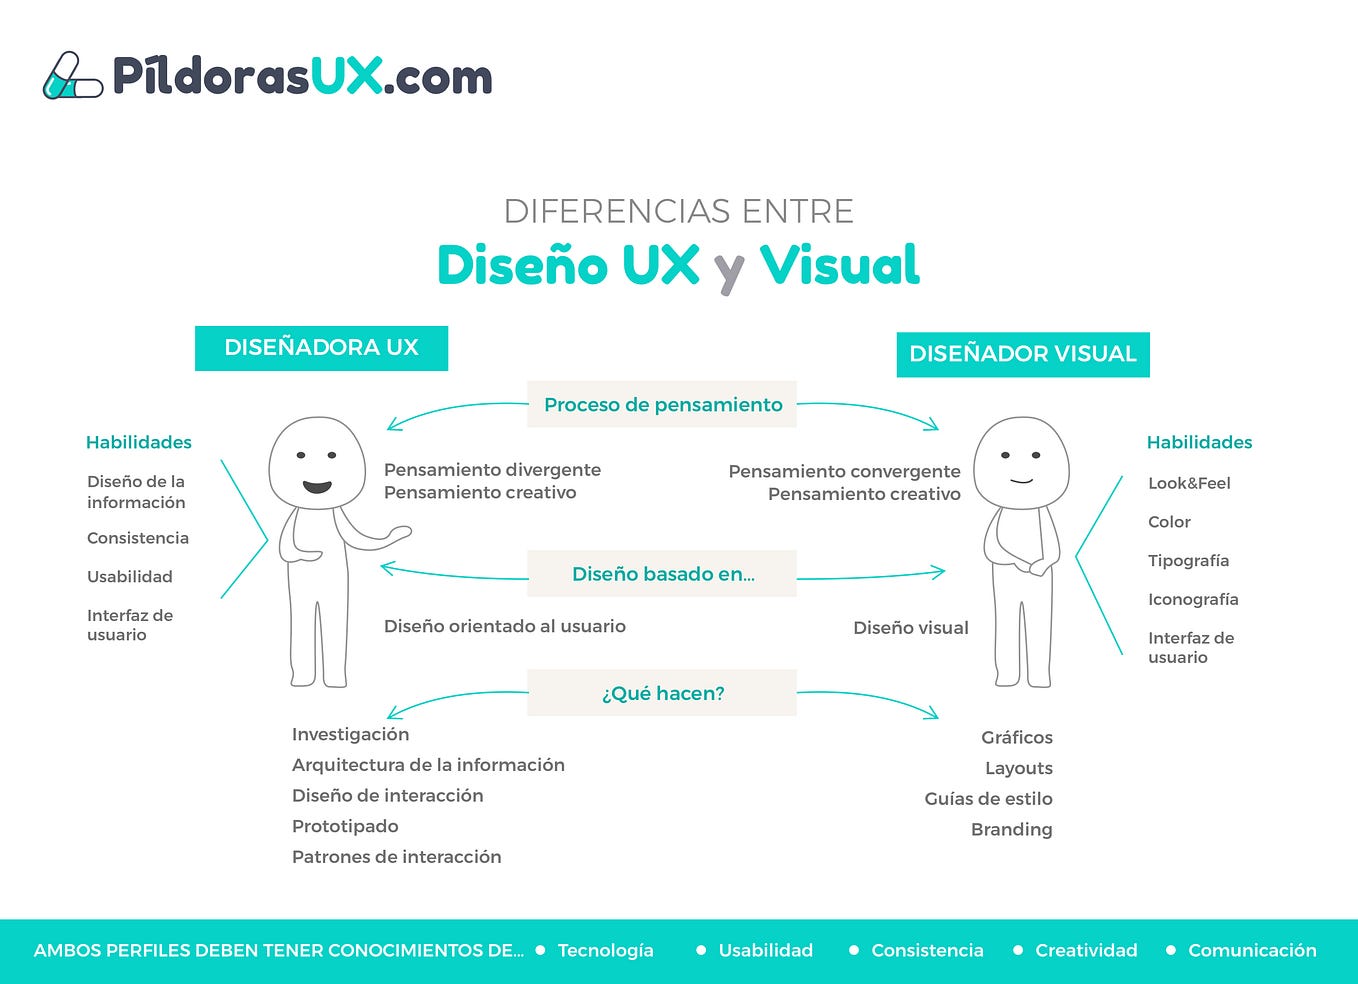 UX Design vs Visual Design